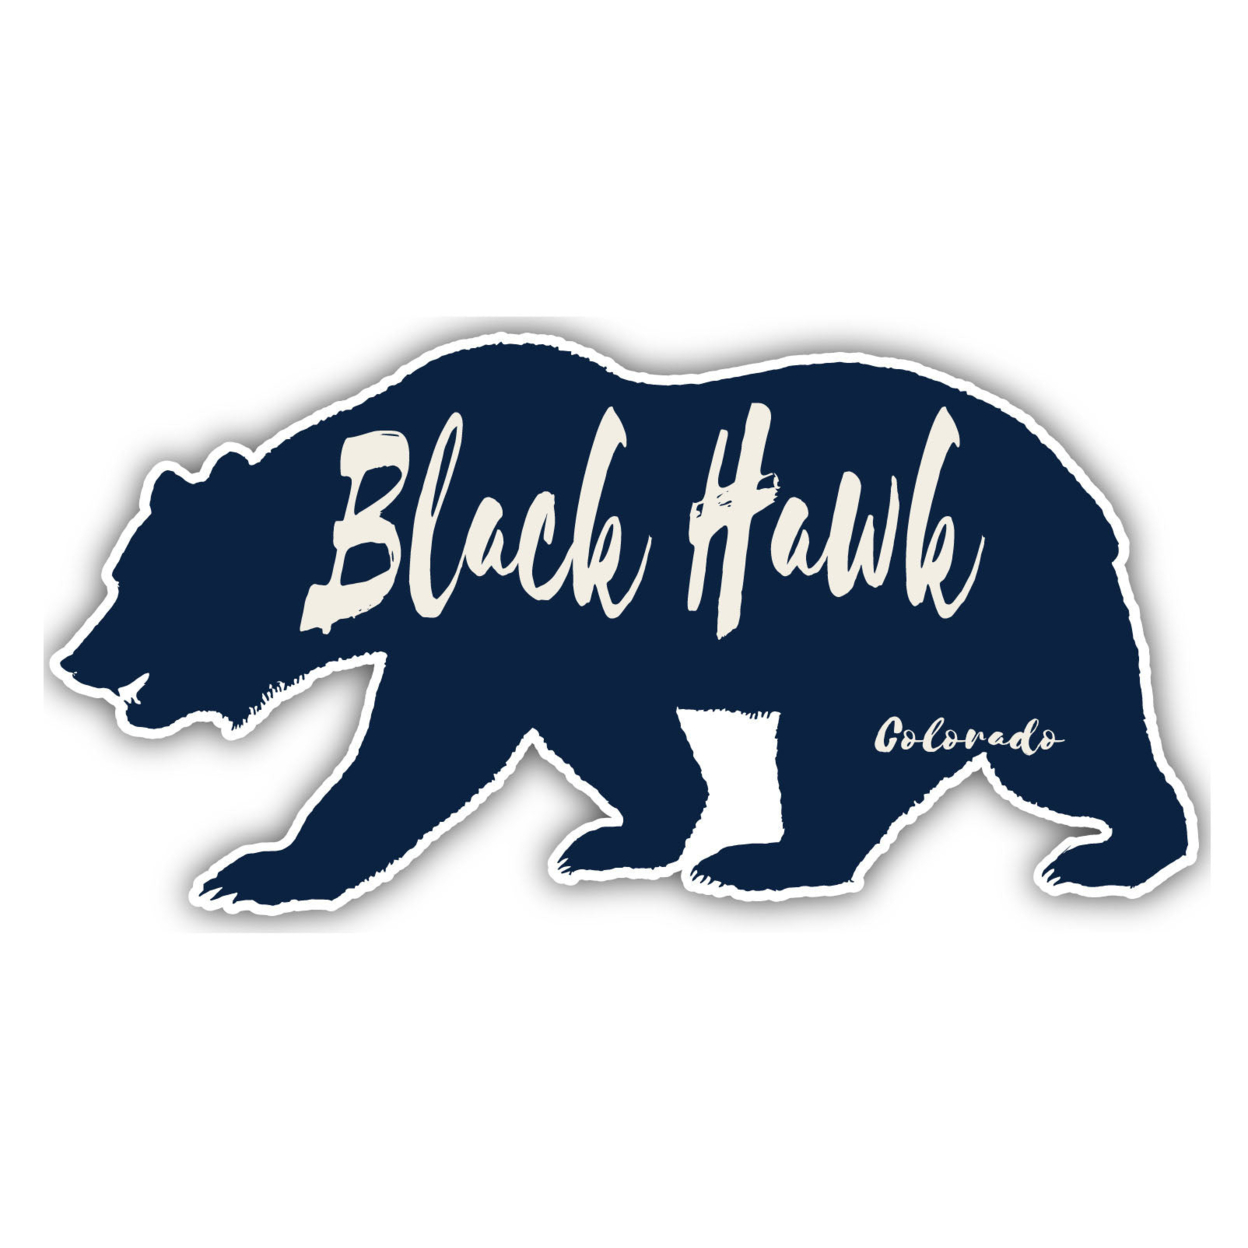 Black Hawk Colorado Souvenir Decorative Stickers (Choose Theme And Size) - Single Unit, 6-Inch, Tent